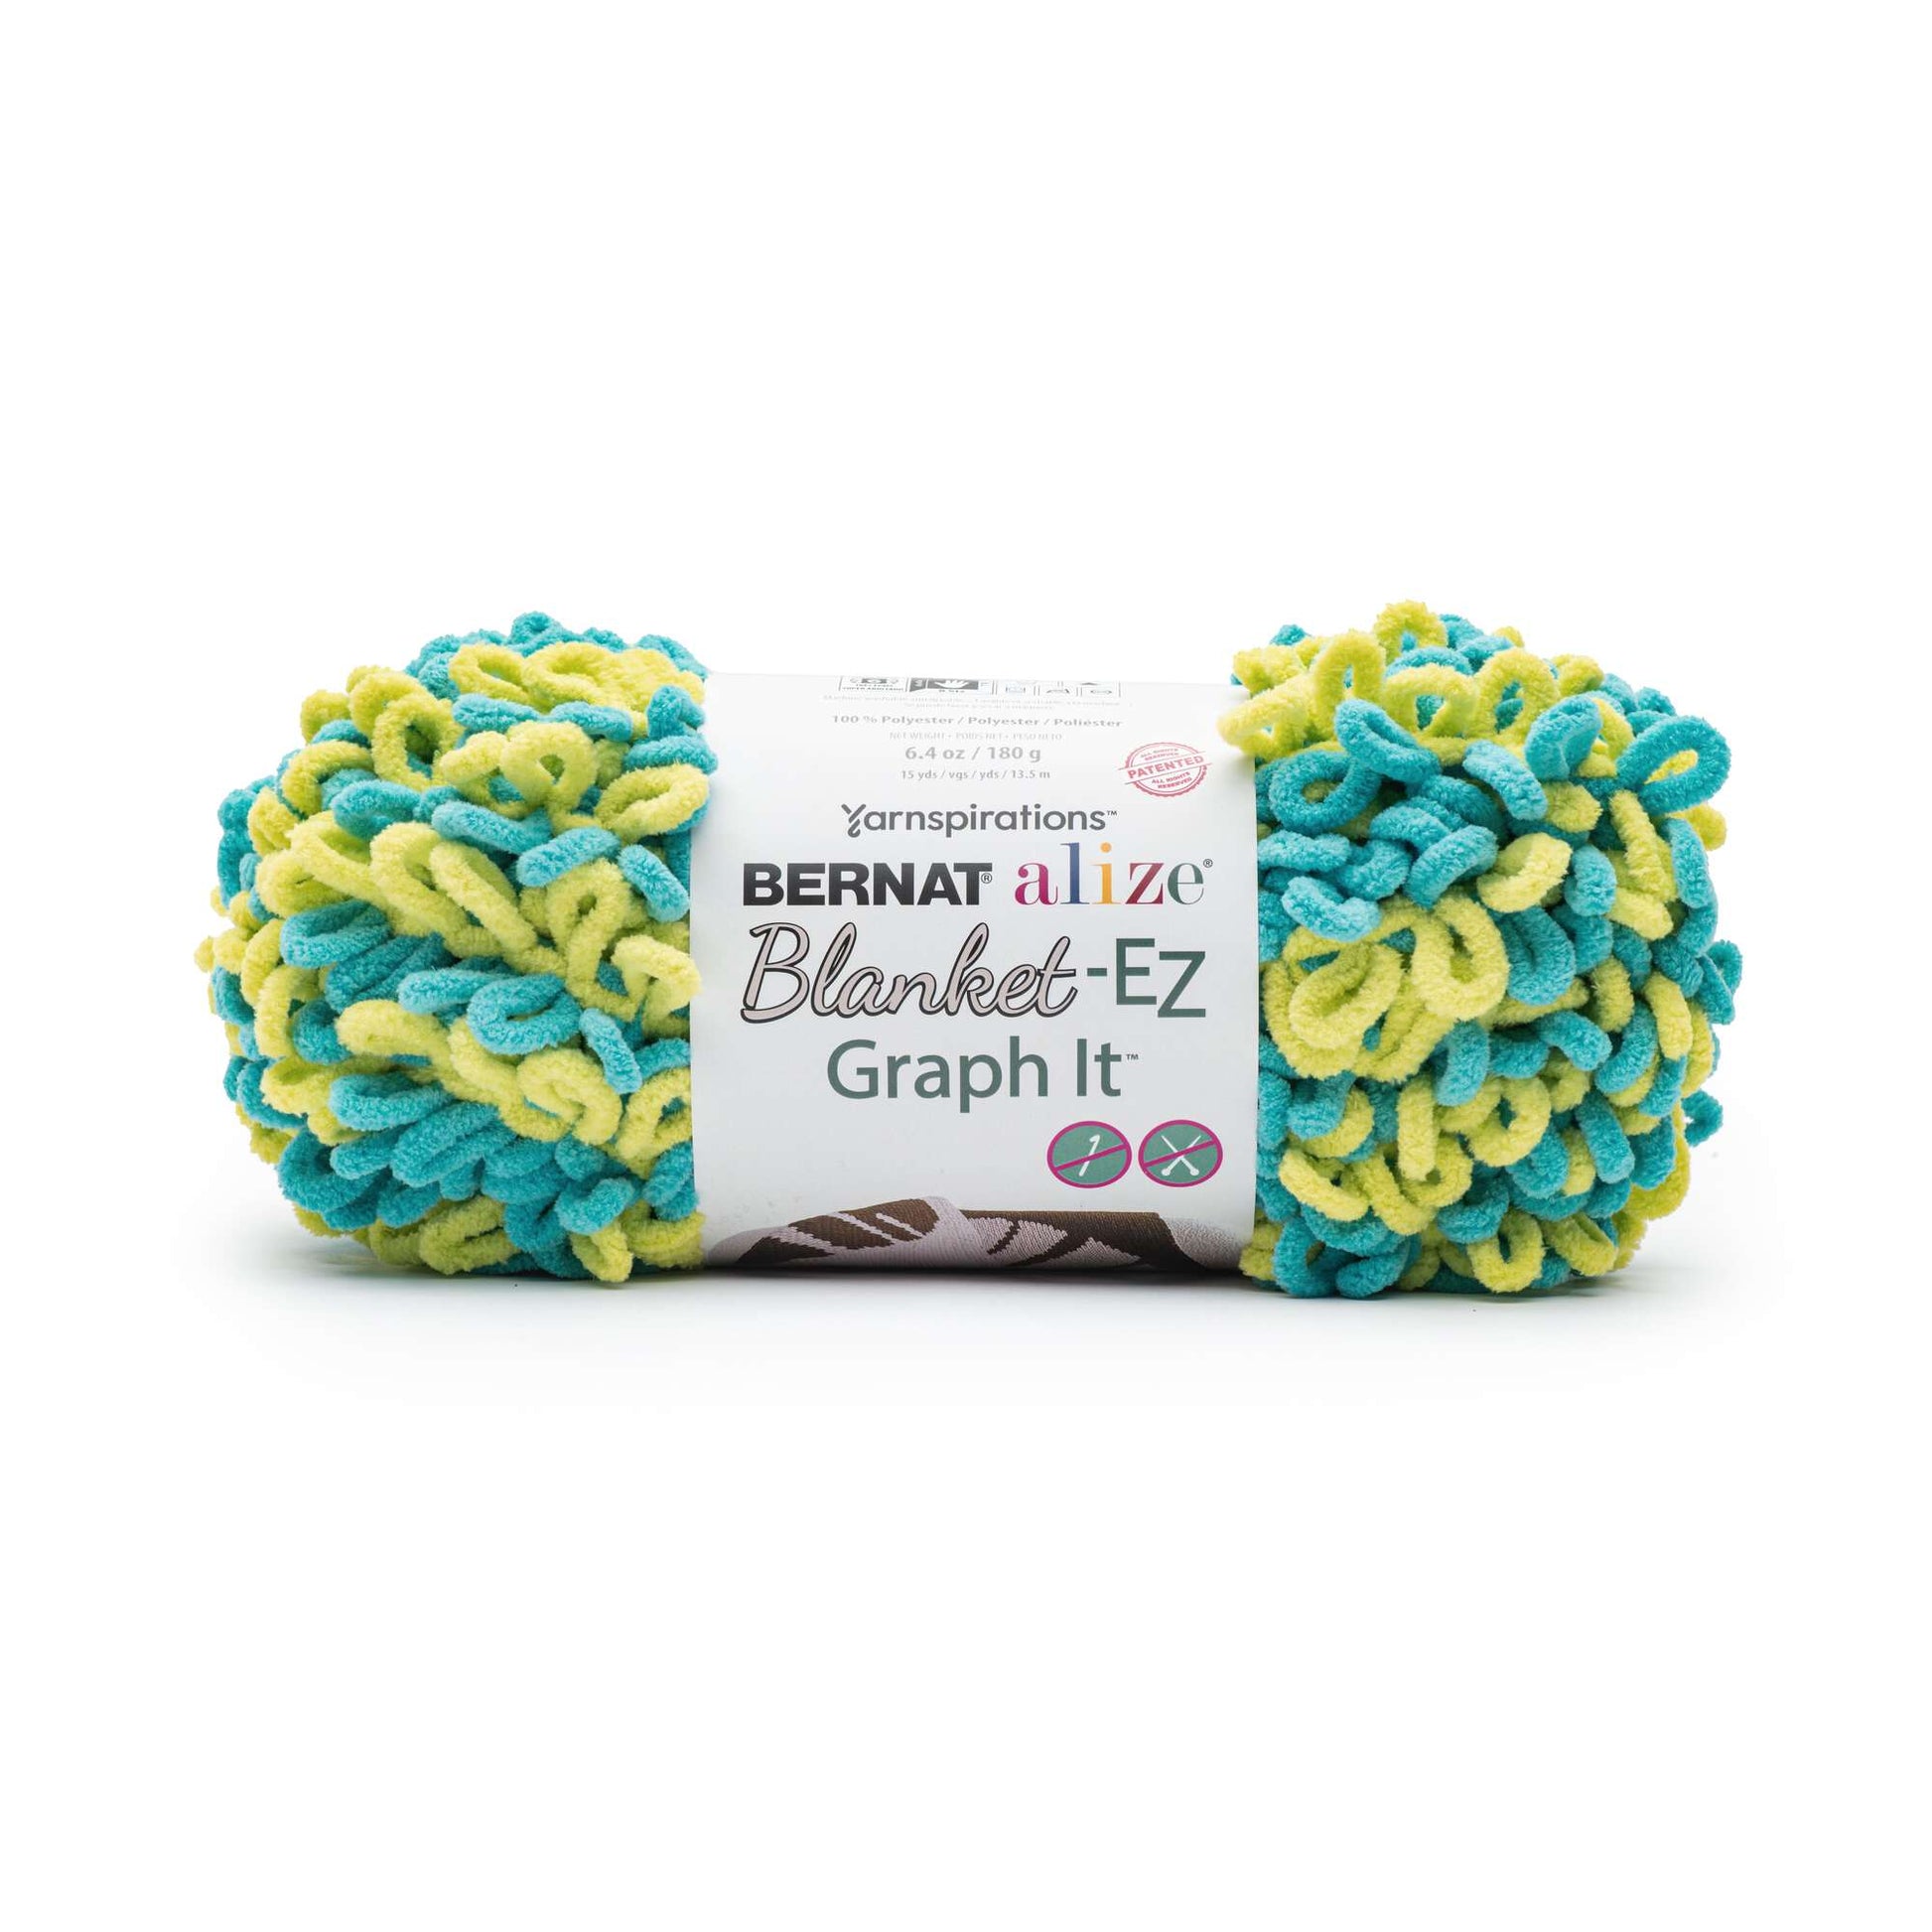 Bernat Alize Blanket-EZ Graph It Yarn - Discontinued shades